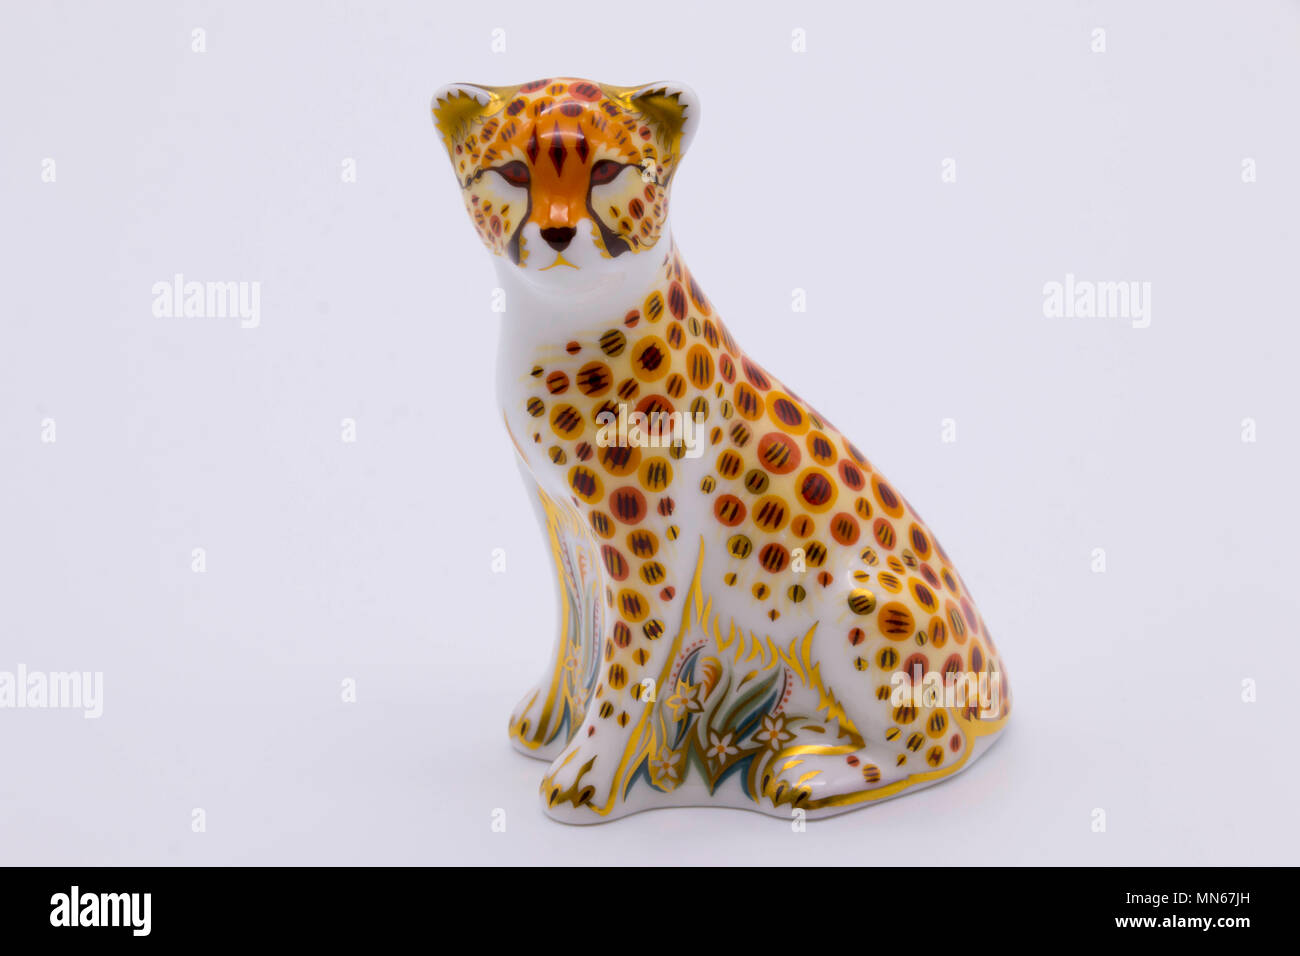 Royal Crown Derby bone china paperweight of a cheetah cub uk Stock Photo